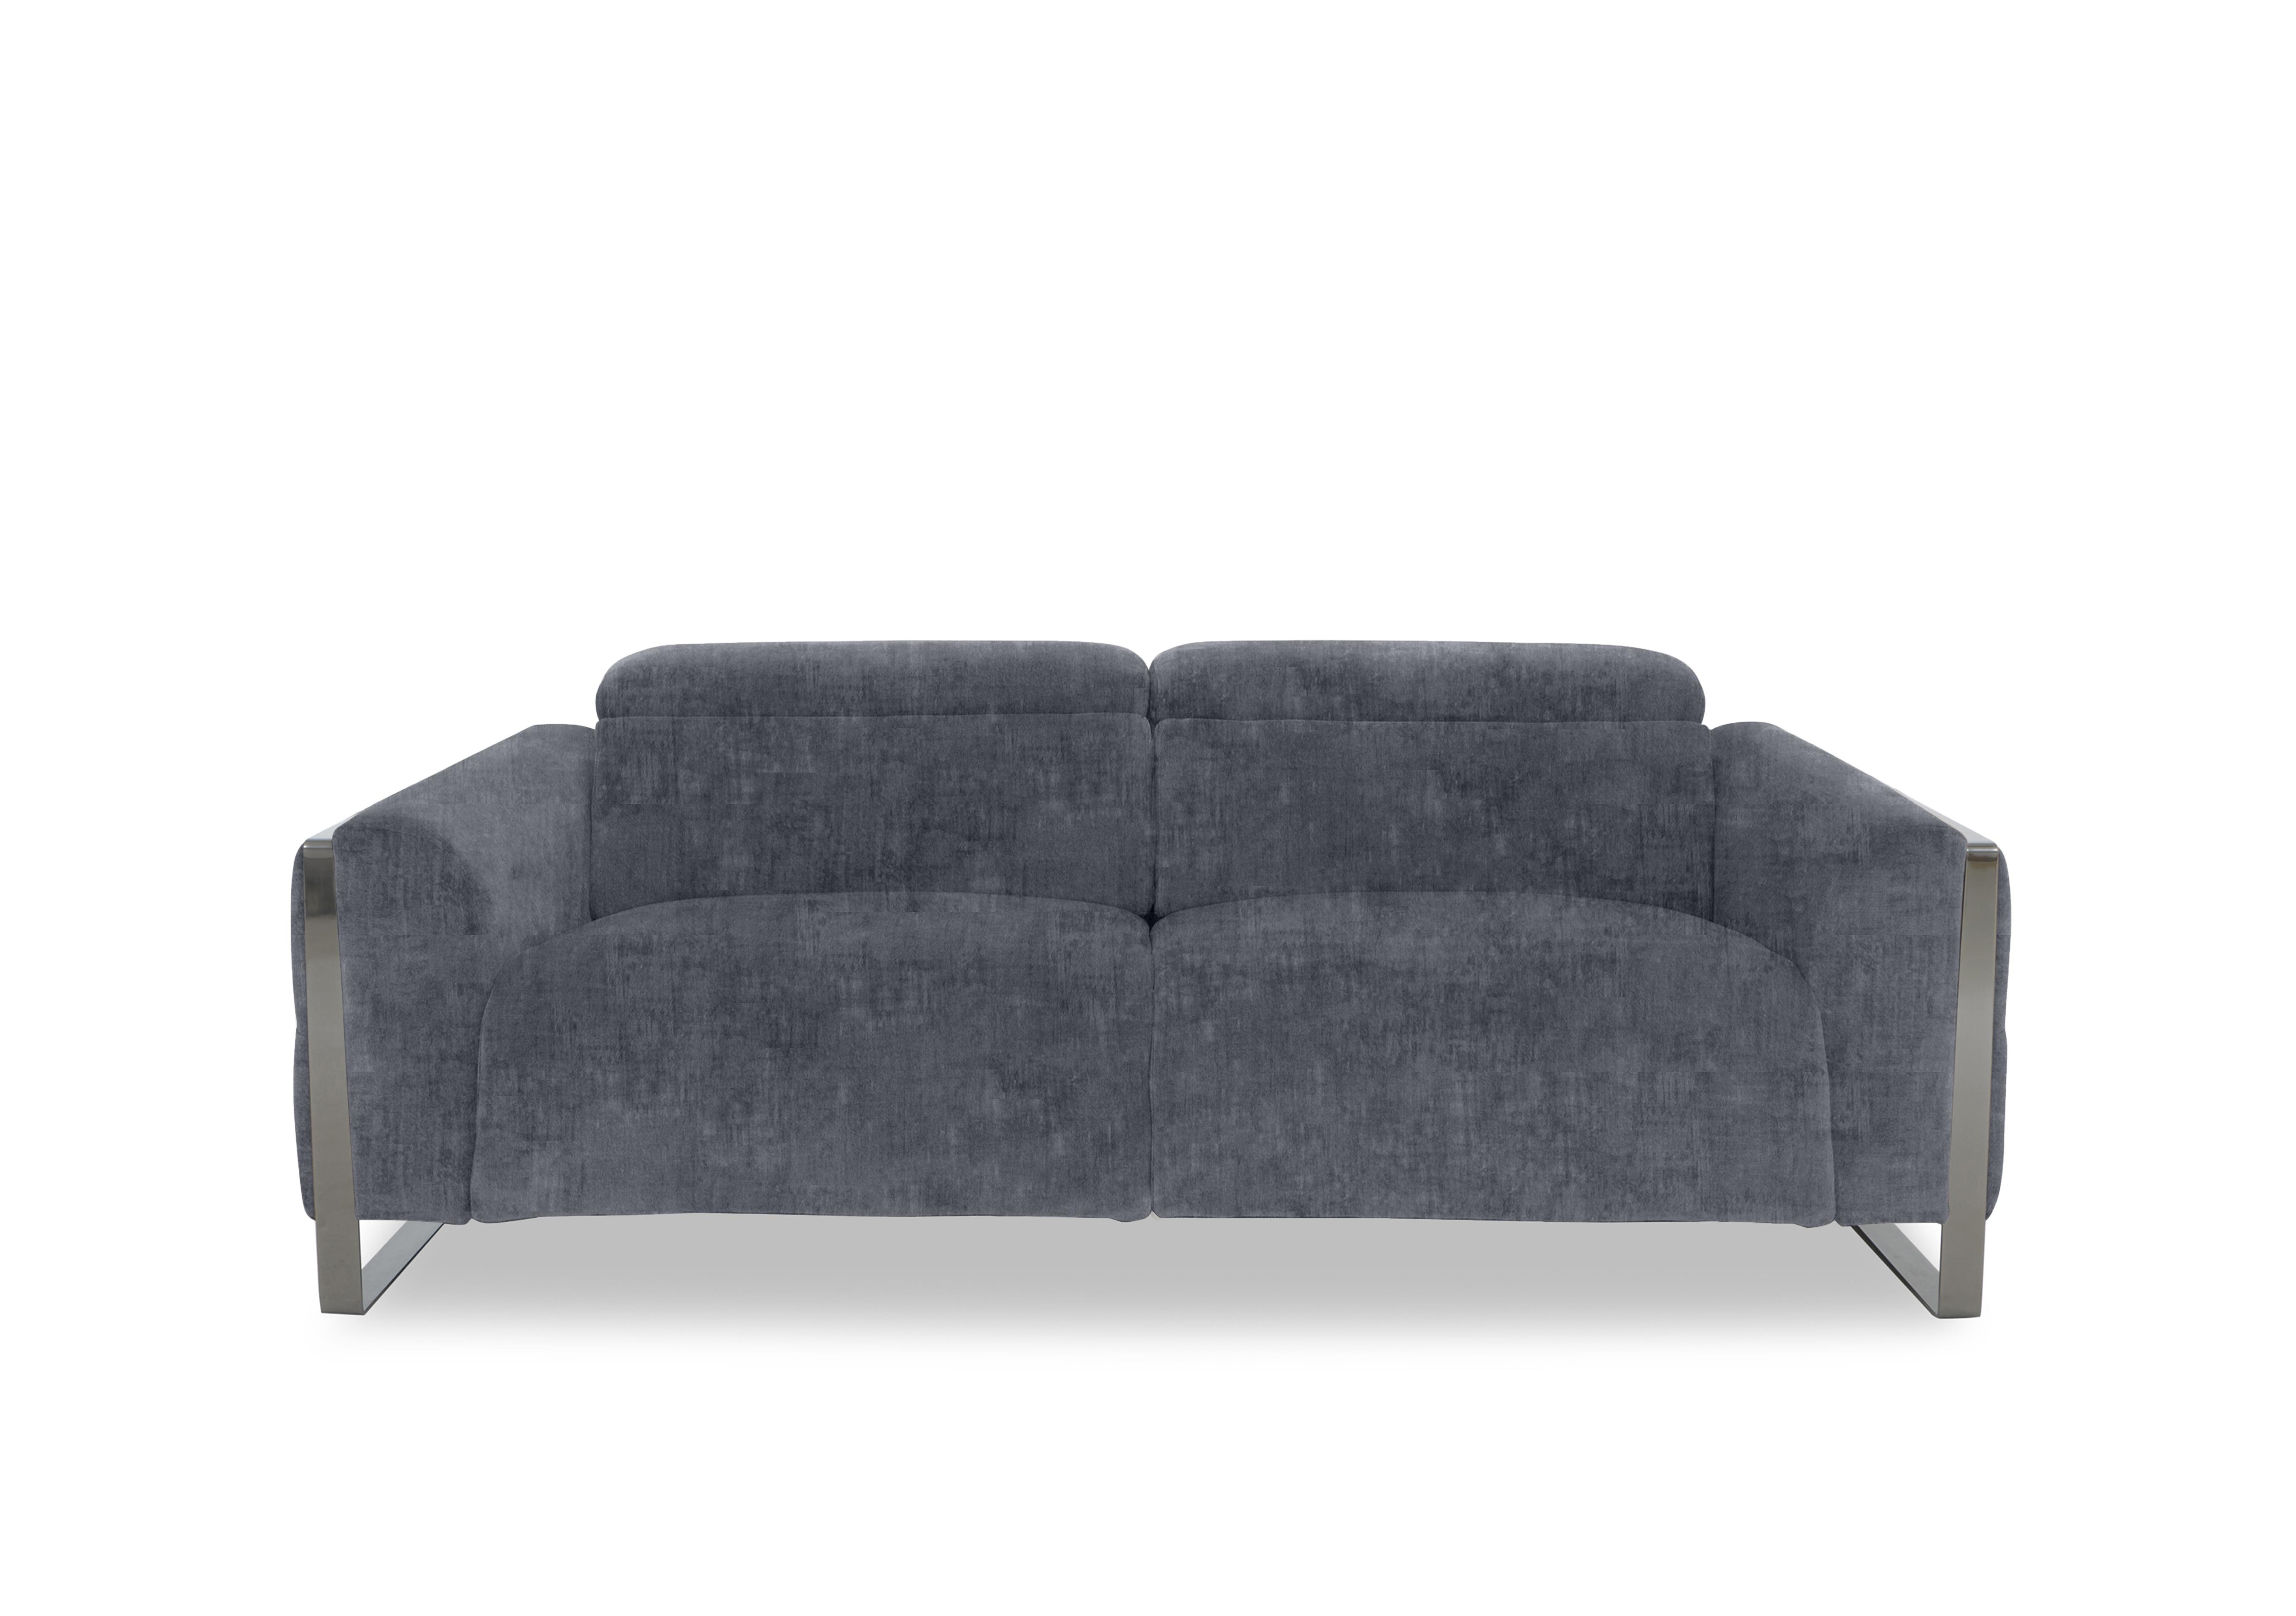 Gisella Fabric 3 Seater Sofa in Heritage Granite 52001 on Furniture Village